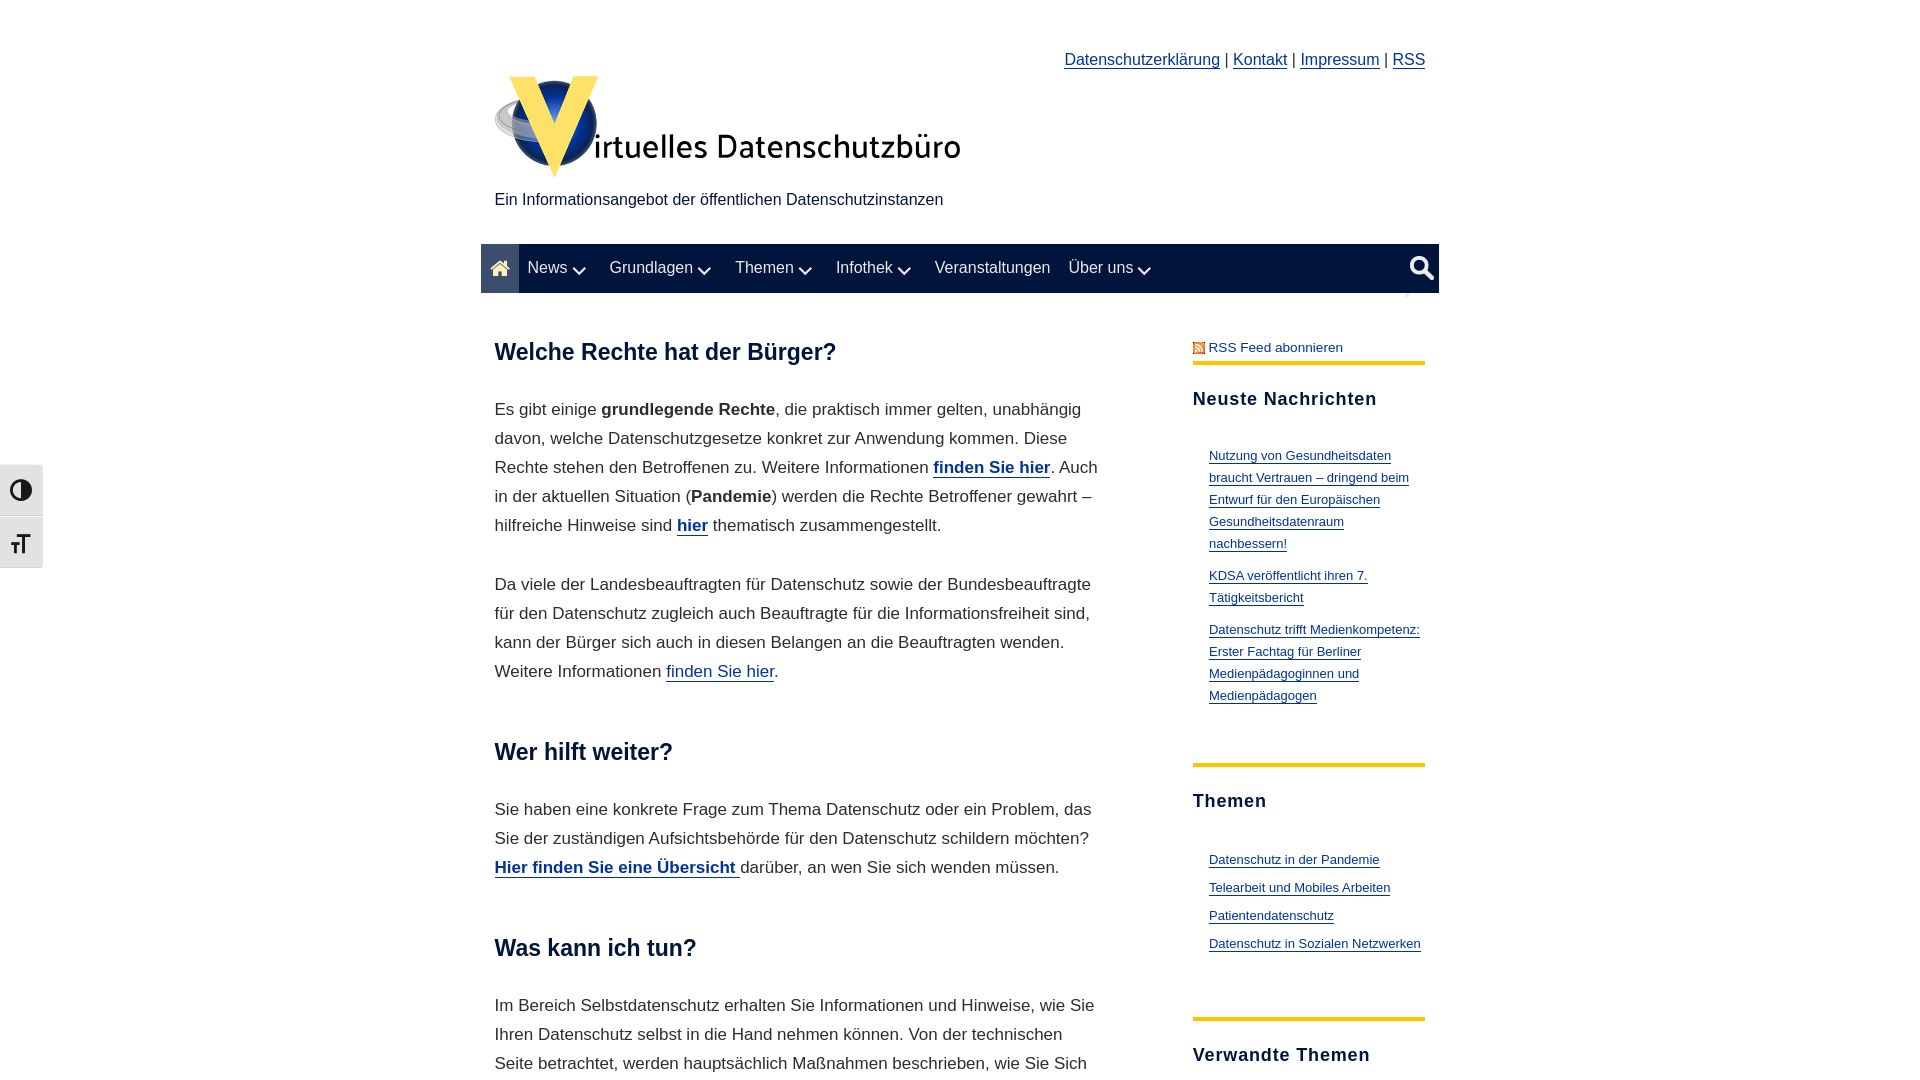 Status do site datenschutz.de está   ONLINE